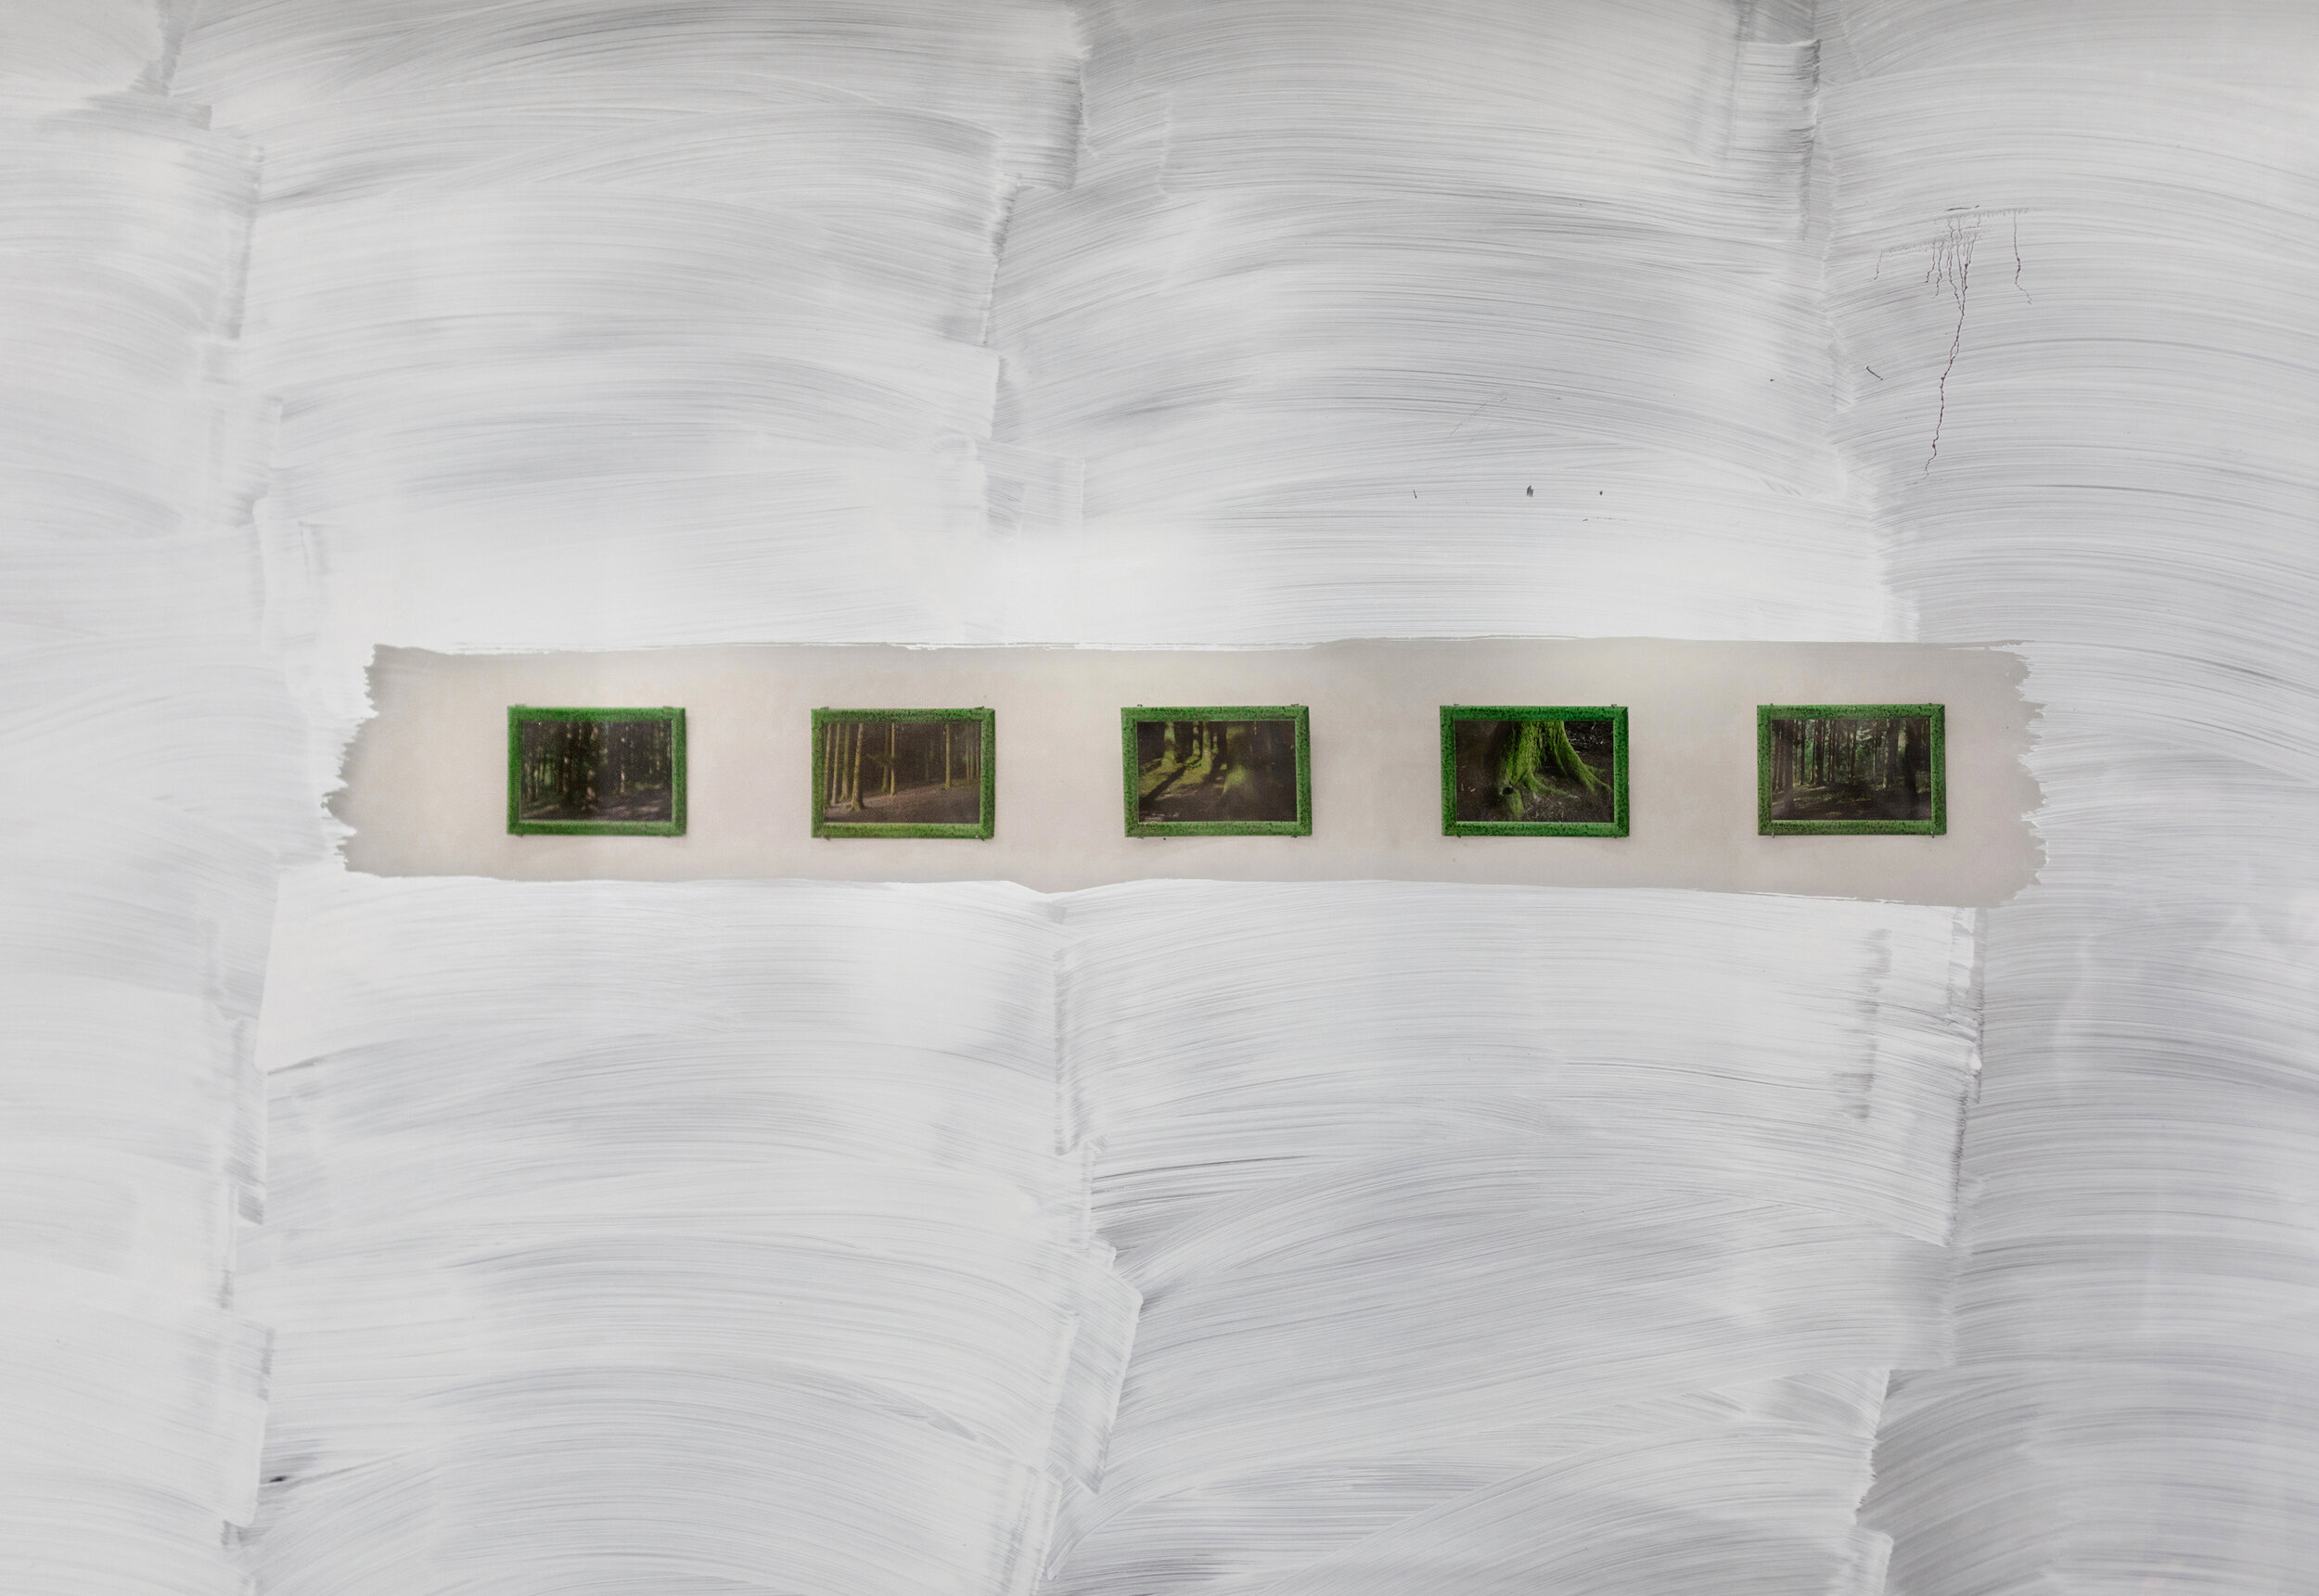  Mona Varichon,  The woods near Treignac 1-5 , silver print (Photop’s frames by Jacques Henry Varichon), 11x16cm each, 2018-2020  